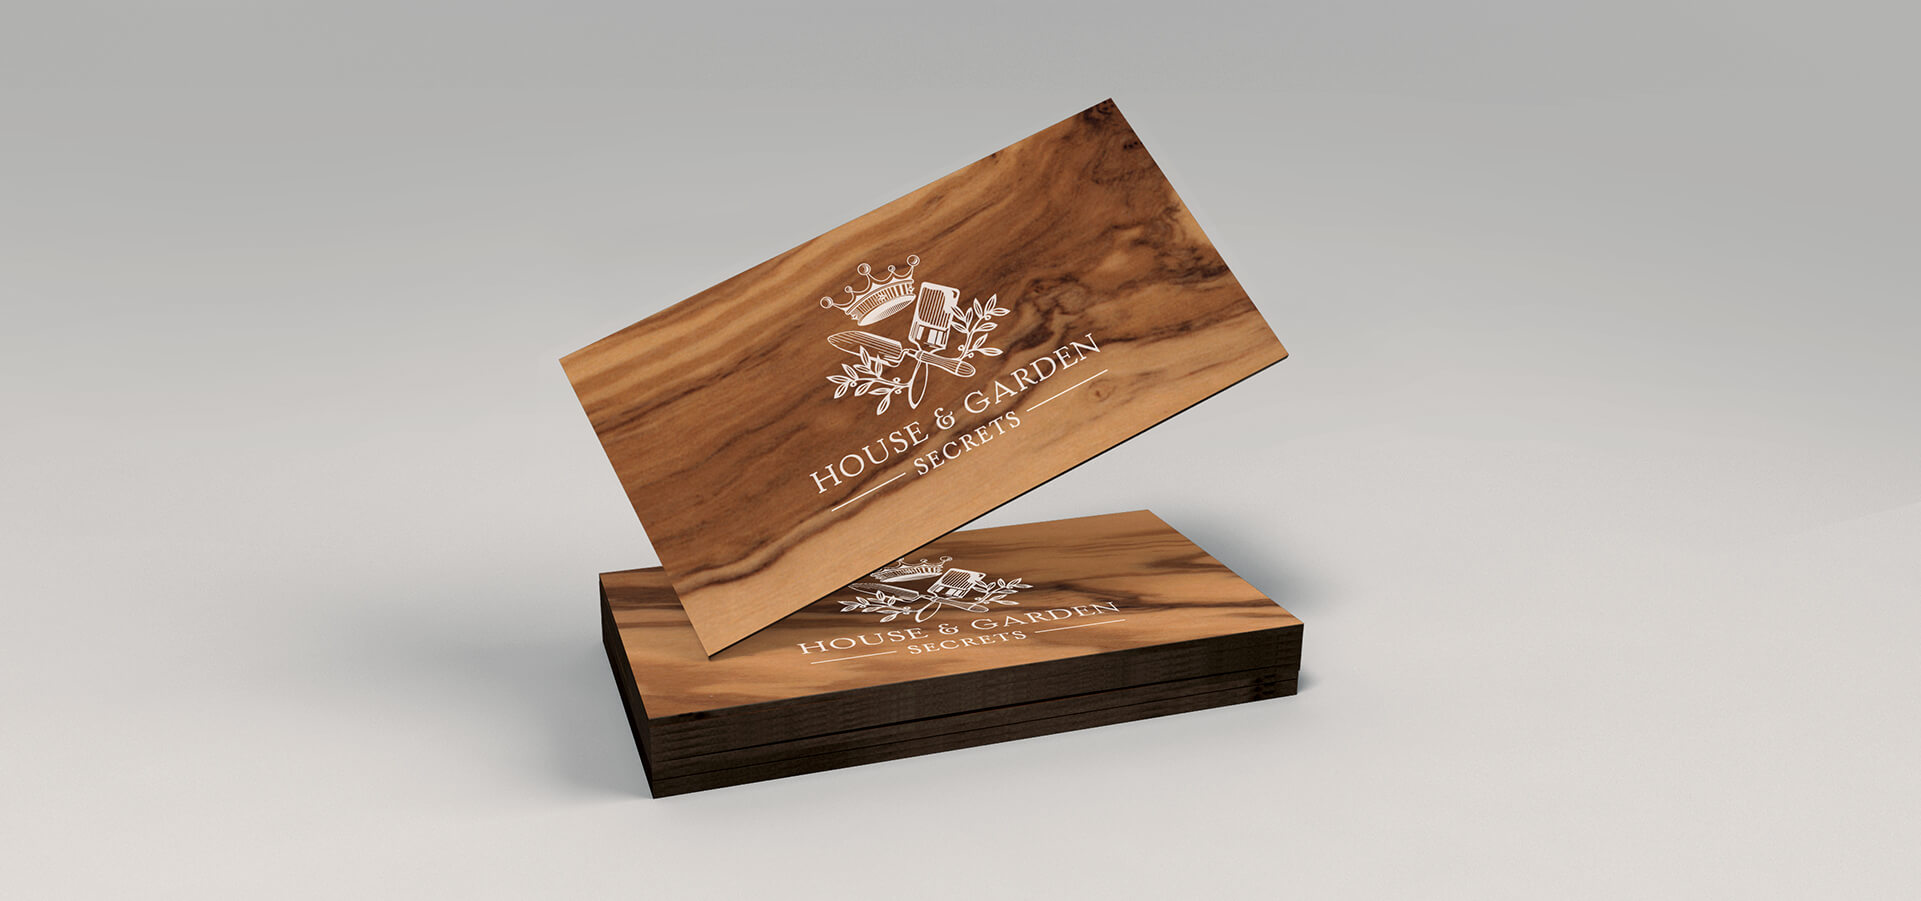 Wood veneer business cards with logo